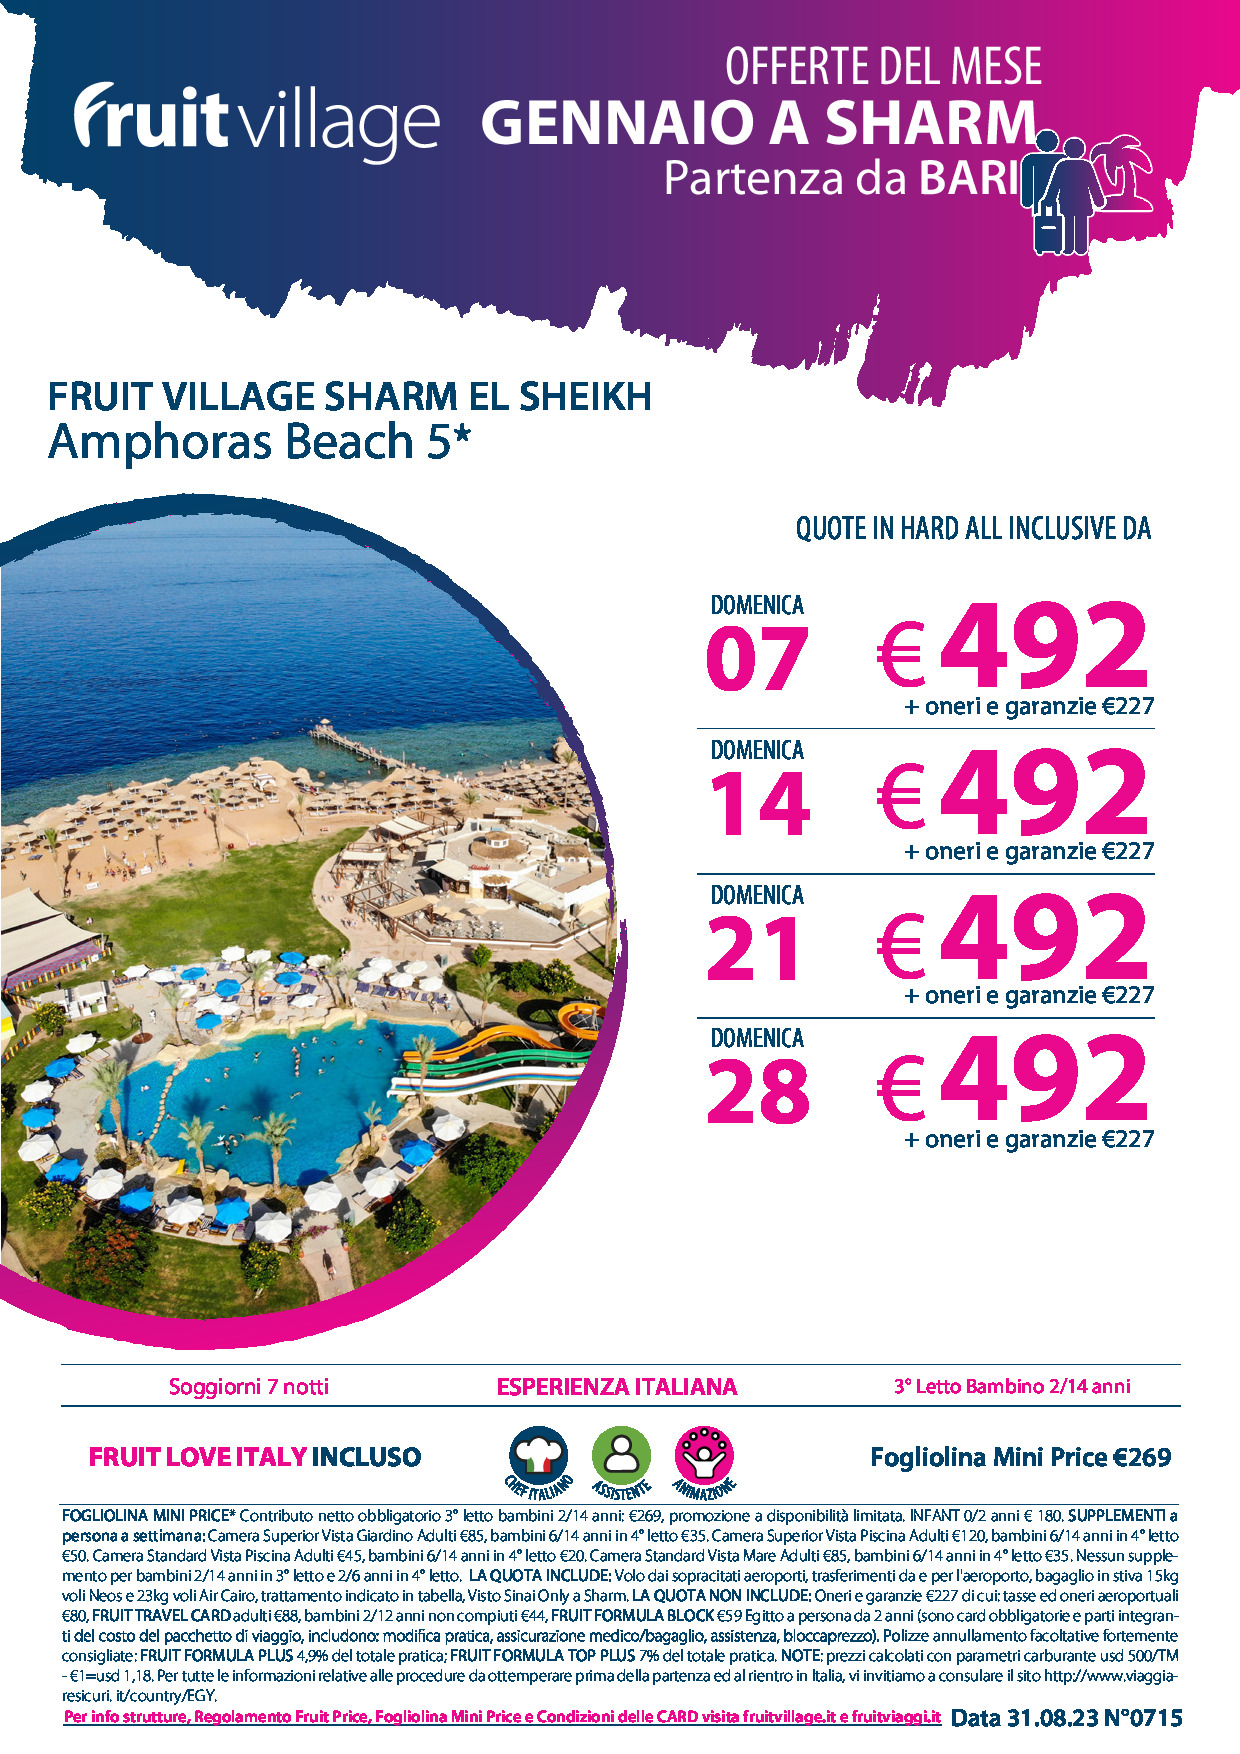 FRUIT VILLAGE Sharm El Sheikh Amphoras Beach - da Bari a Gennaio